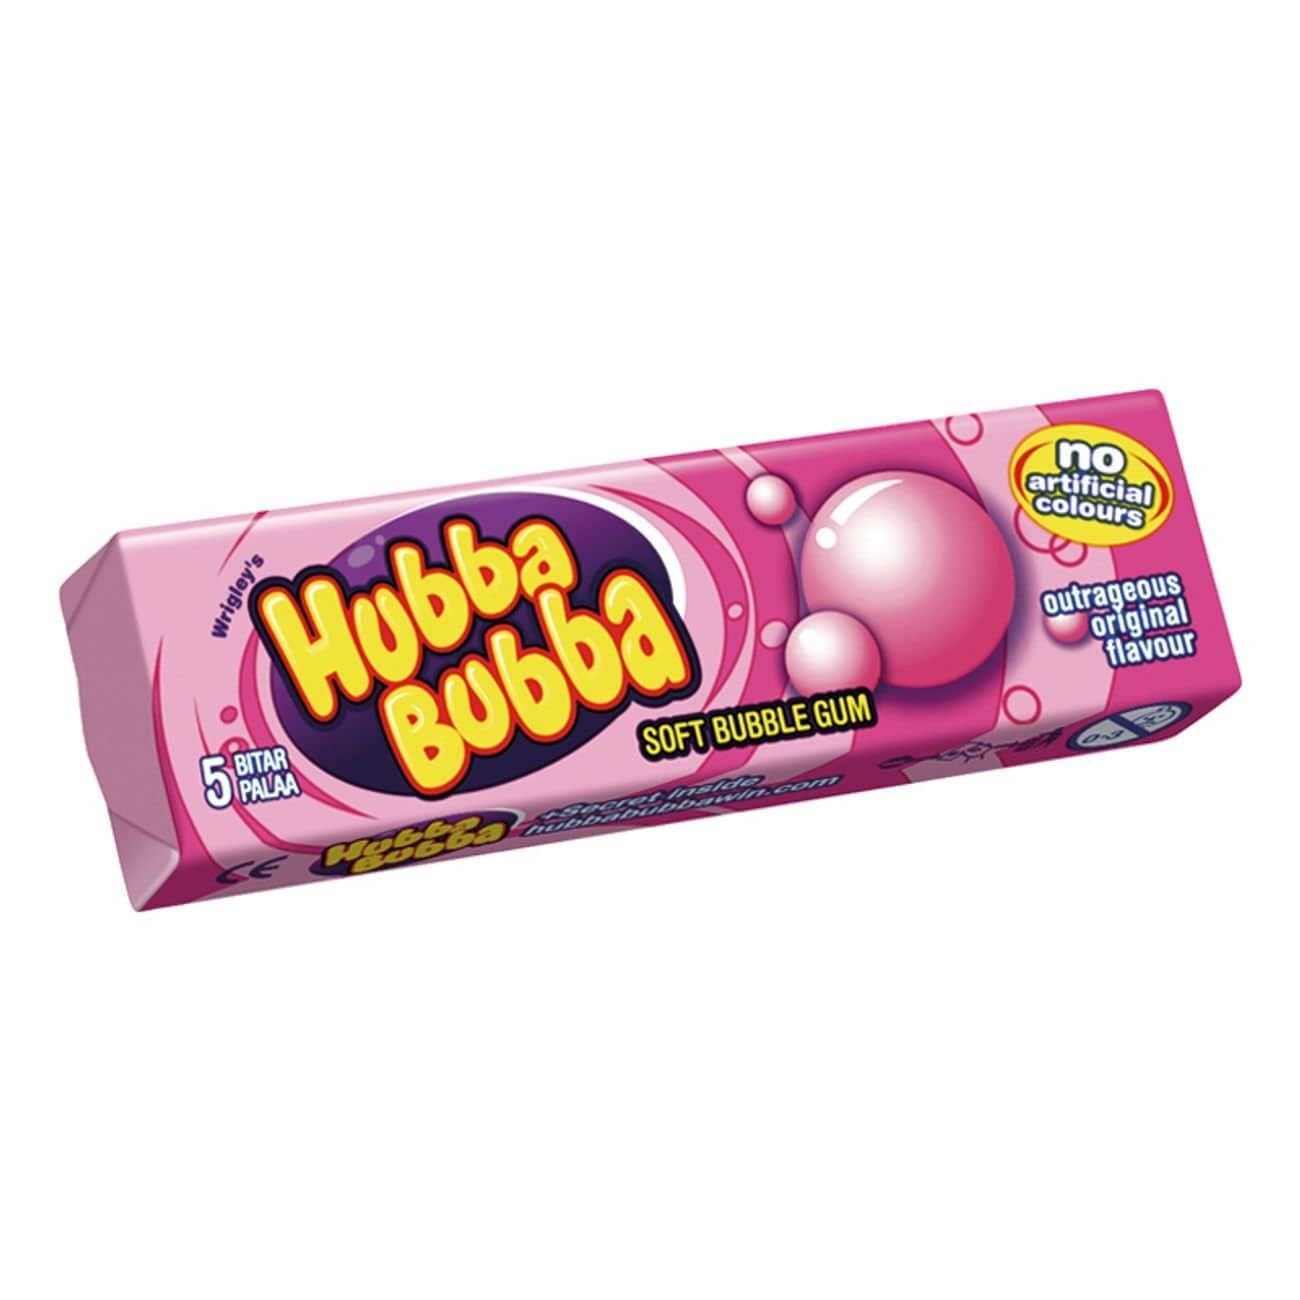 Hubba Bubba Original 35 gram